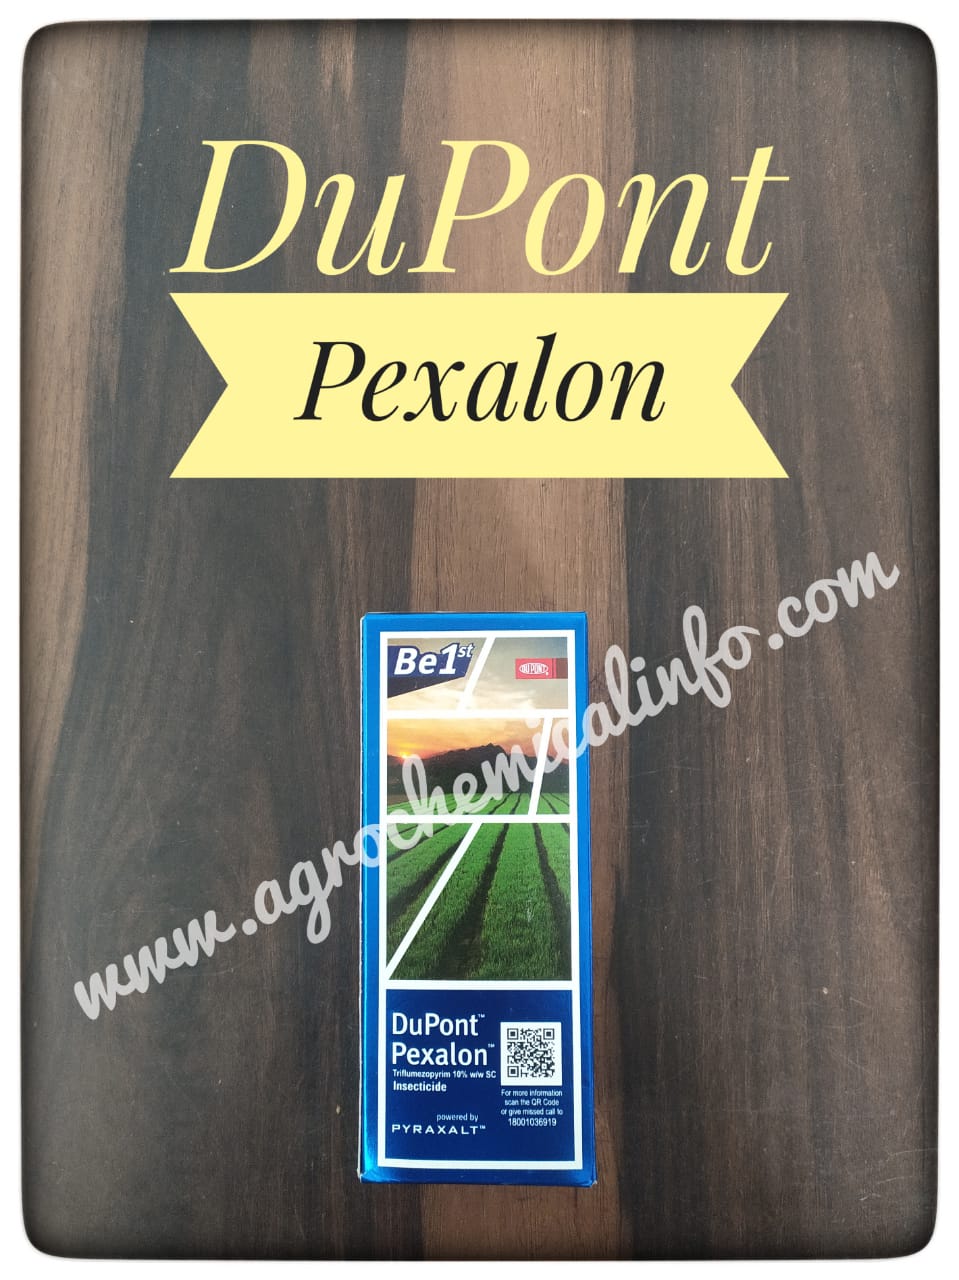 DuPont Pexalon for BPH